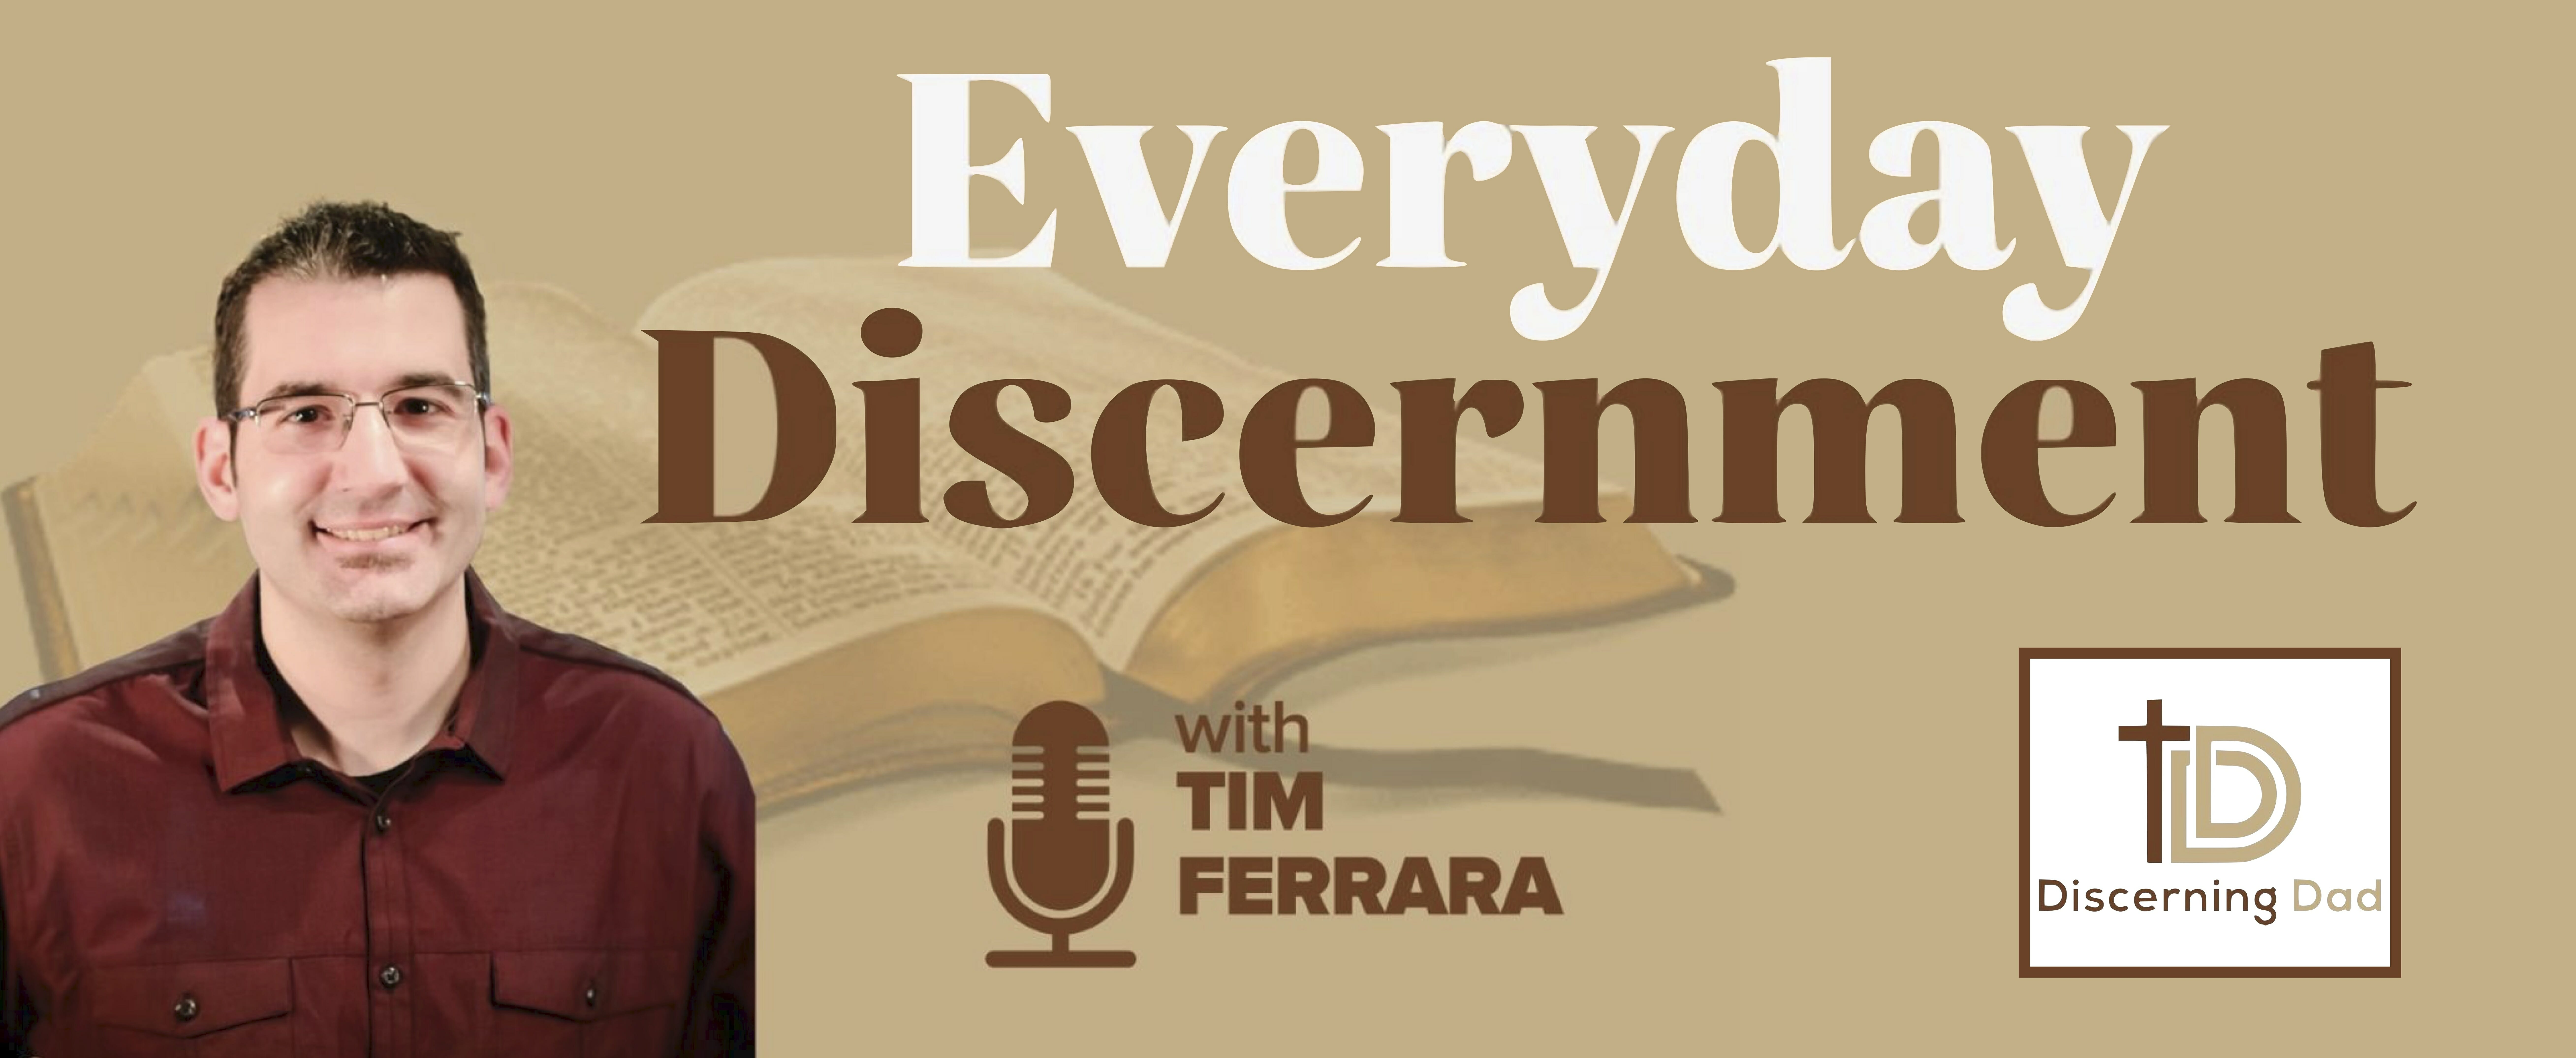 EVERYDAY DISCERNMENT PODCAST: Discernment on Social Media (Bonus Episode)